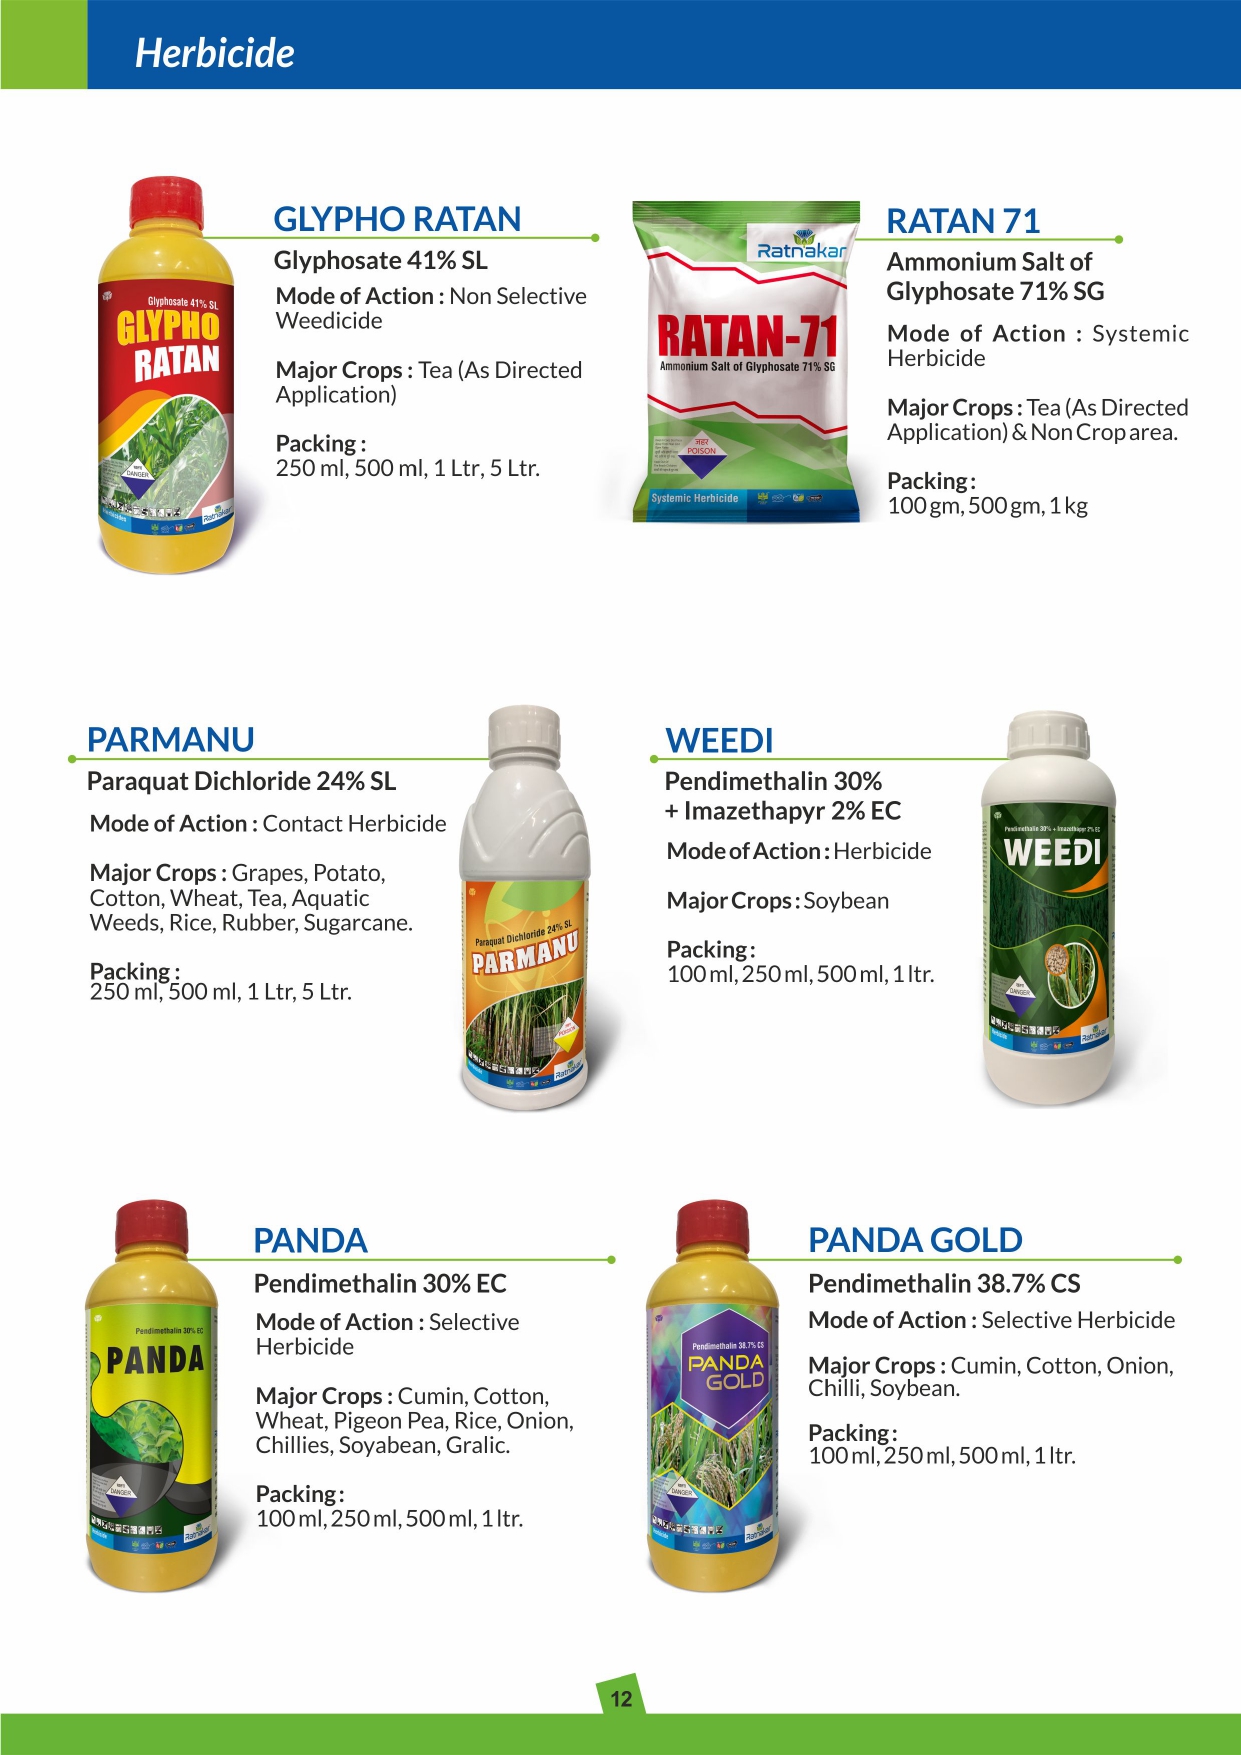 Herbicides from Ratnakar India Ltd